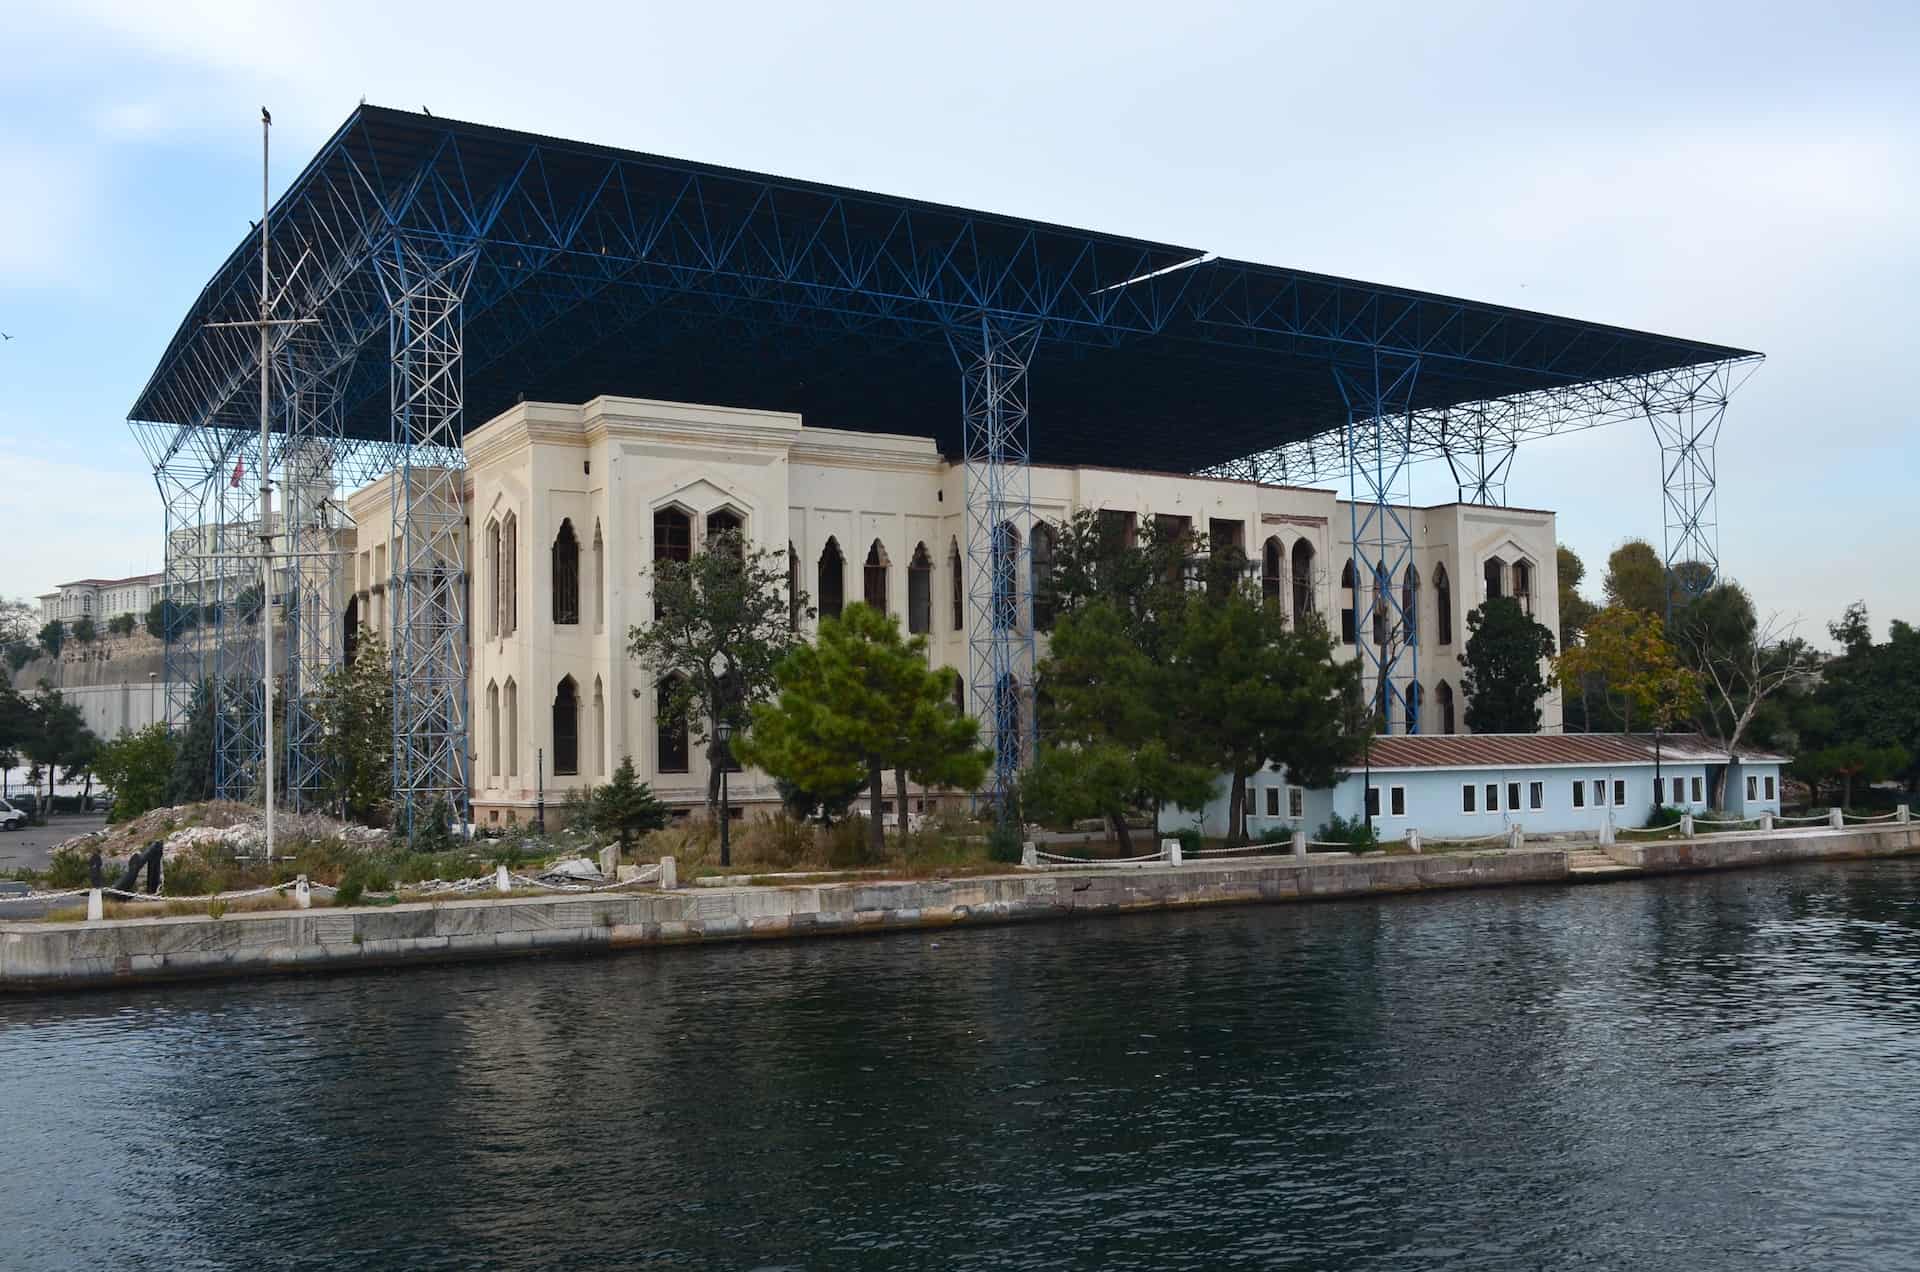 Ottoman Ministry of the Navy in Kasımpaşa, Istanbul, Turkey